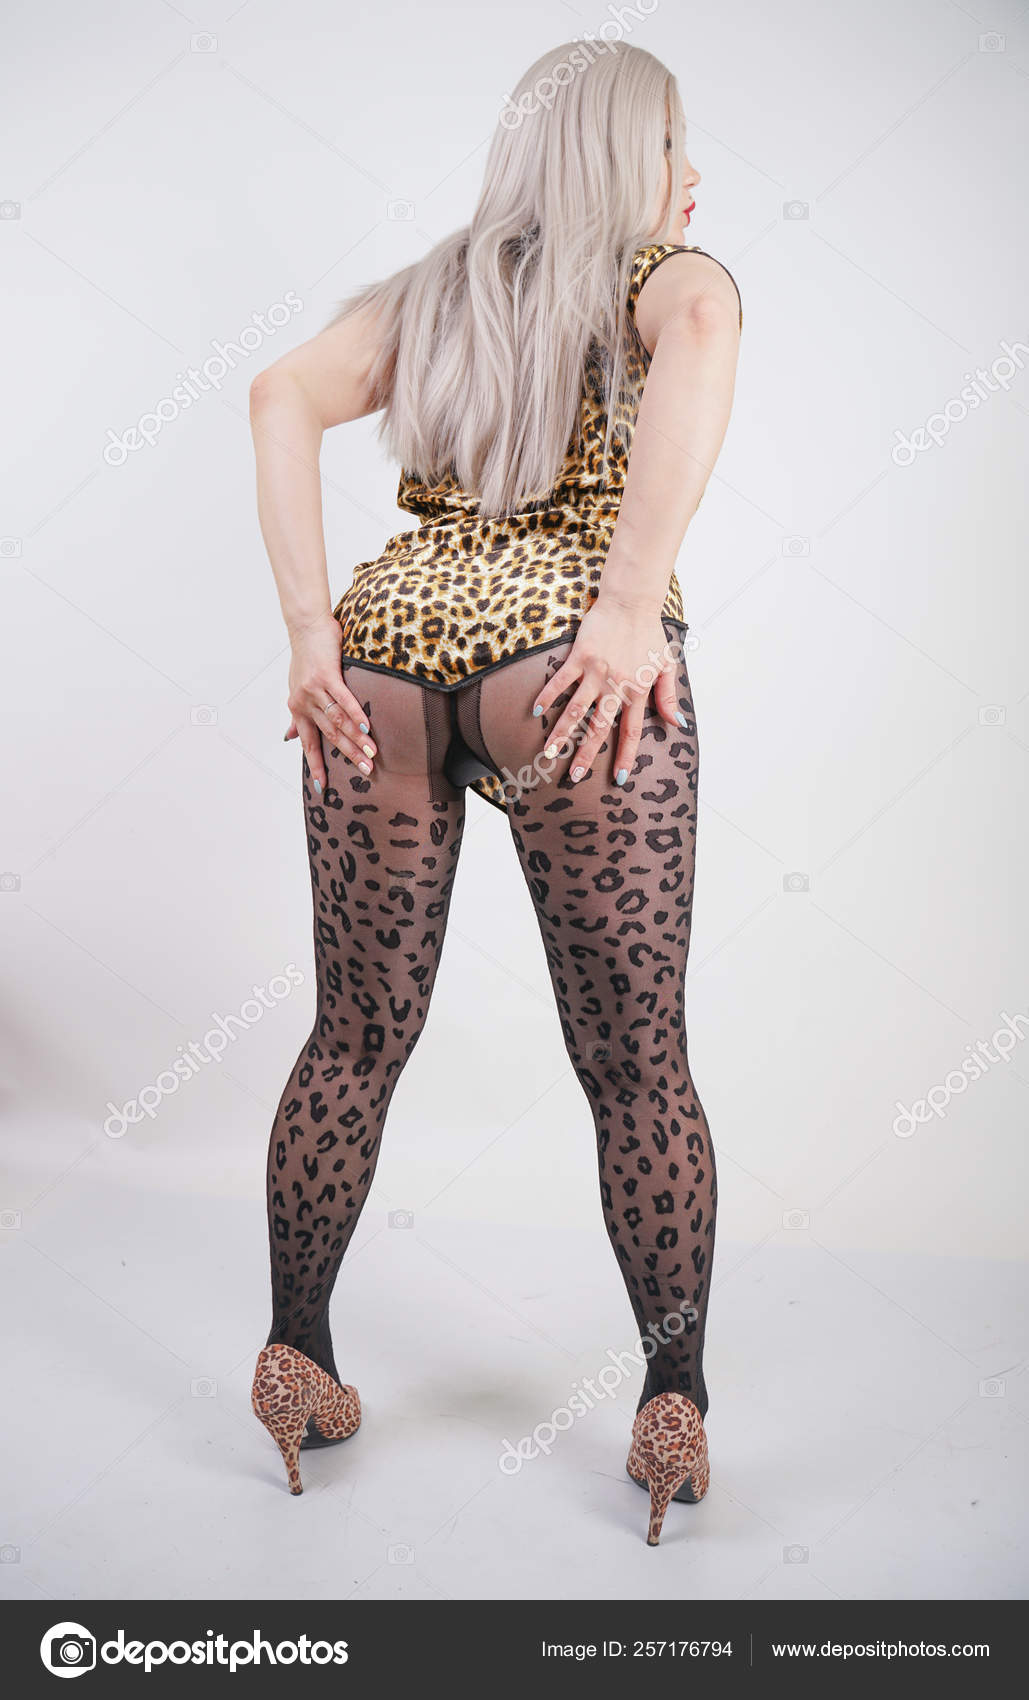 Sexual Erotic Adult Girl Plump Curvy Body Wearing Mini Dress Stock Photo by ©agnadevi 257176794 pic